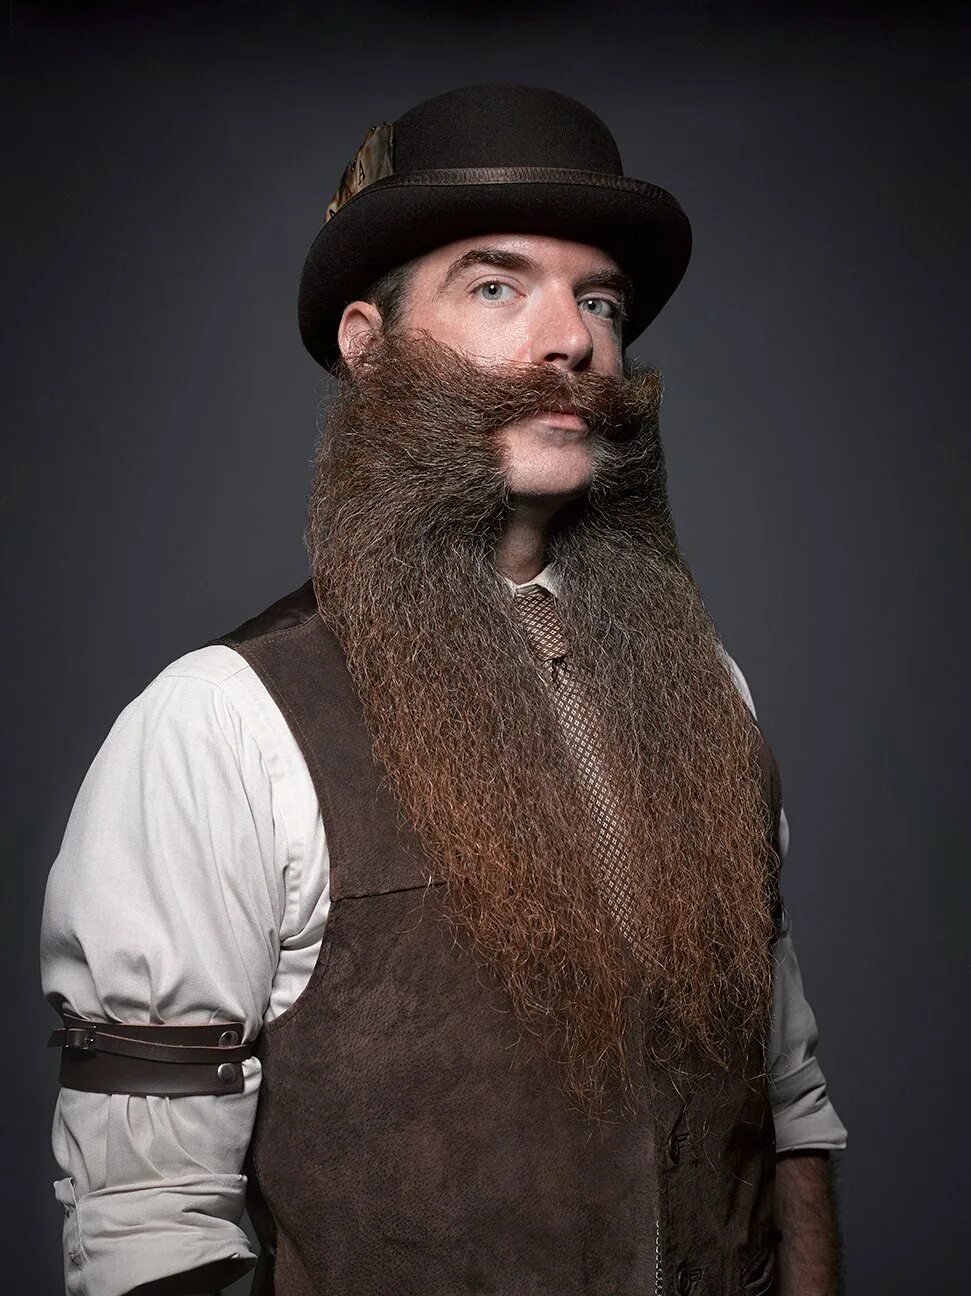 Борода Гарибальди. Мерлиновая борода. Усы борода бакенбарды. Бороды мужские стильные.